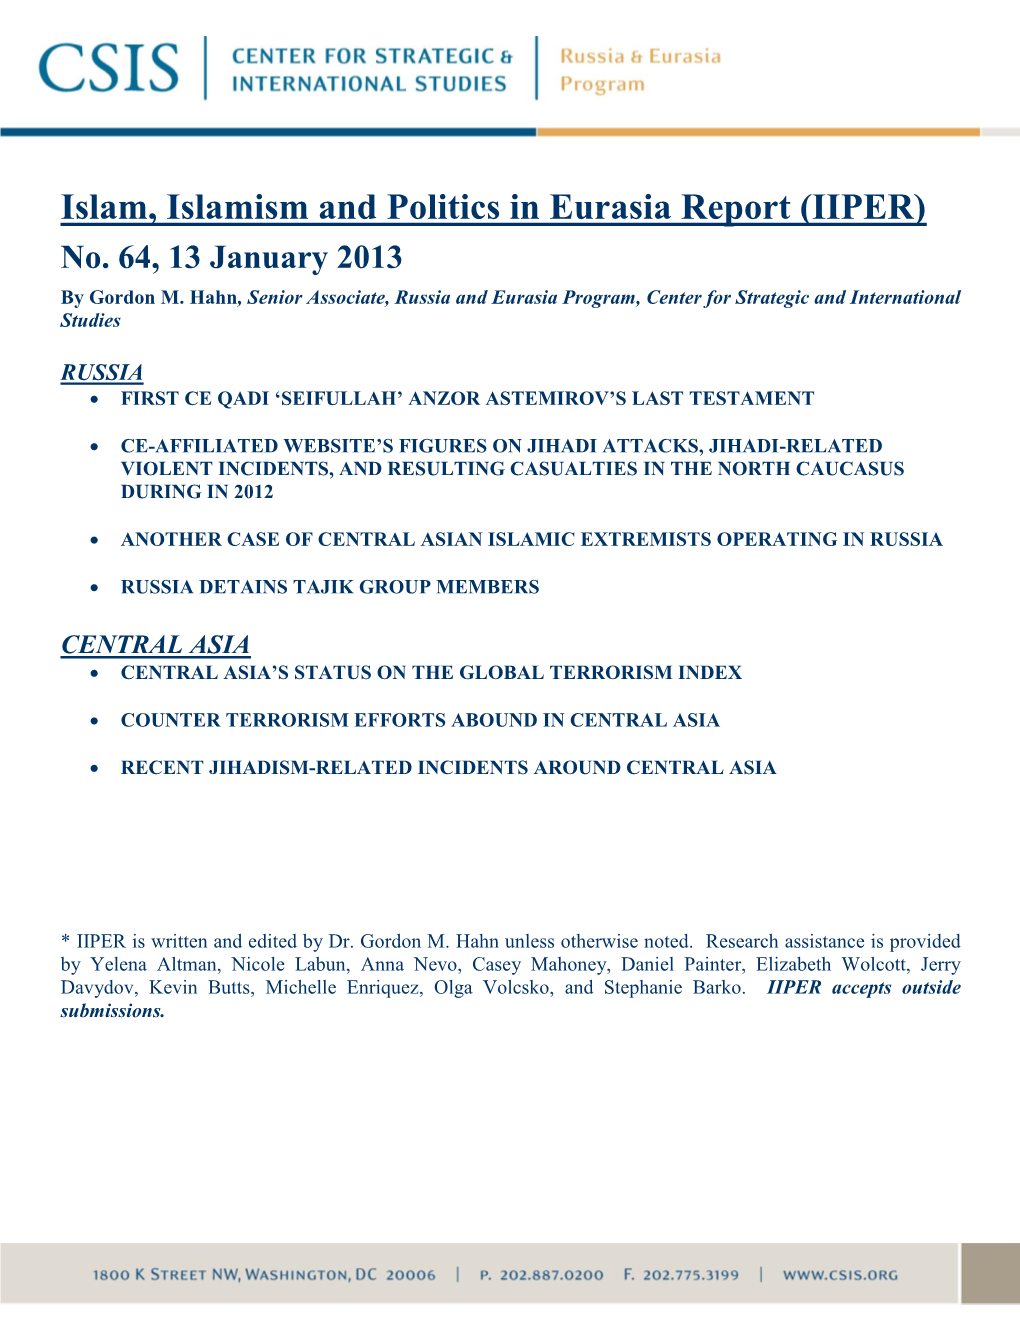 Islam, Islamism and Politics in Eurasia Report (IIPER) No